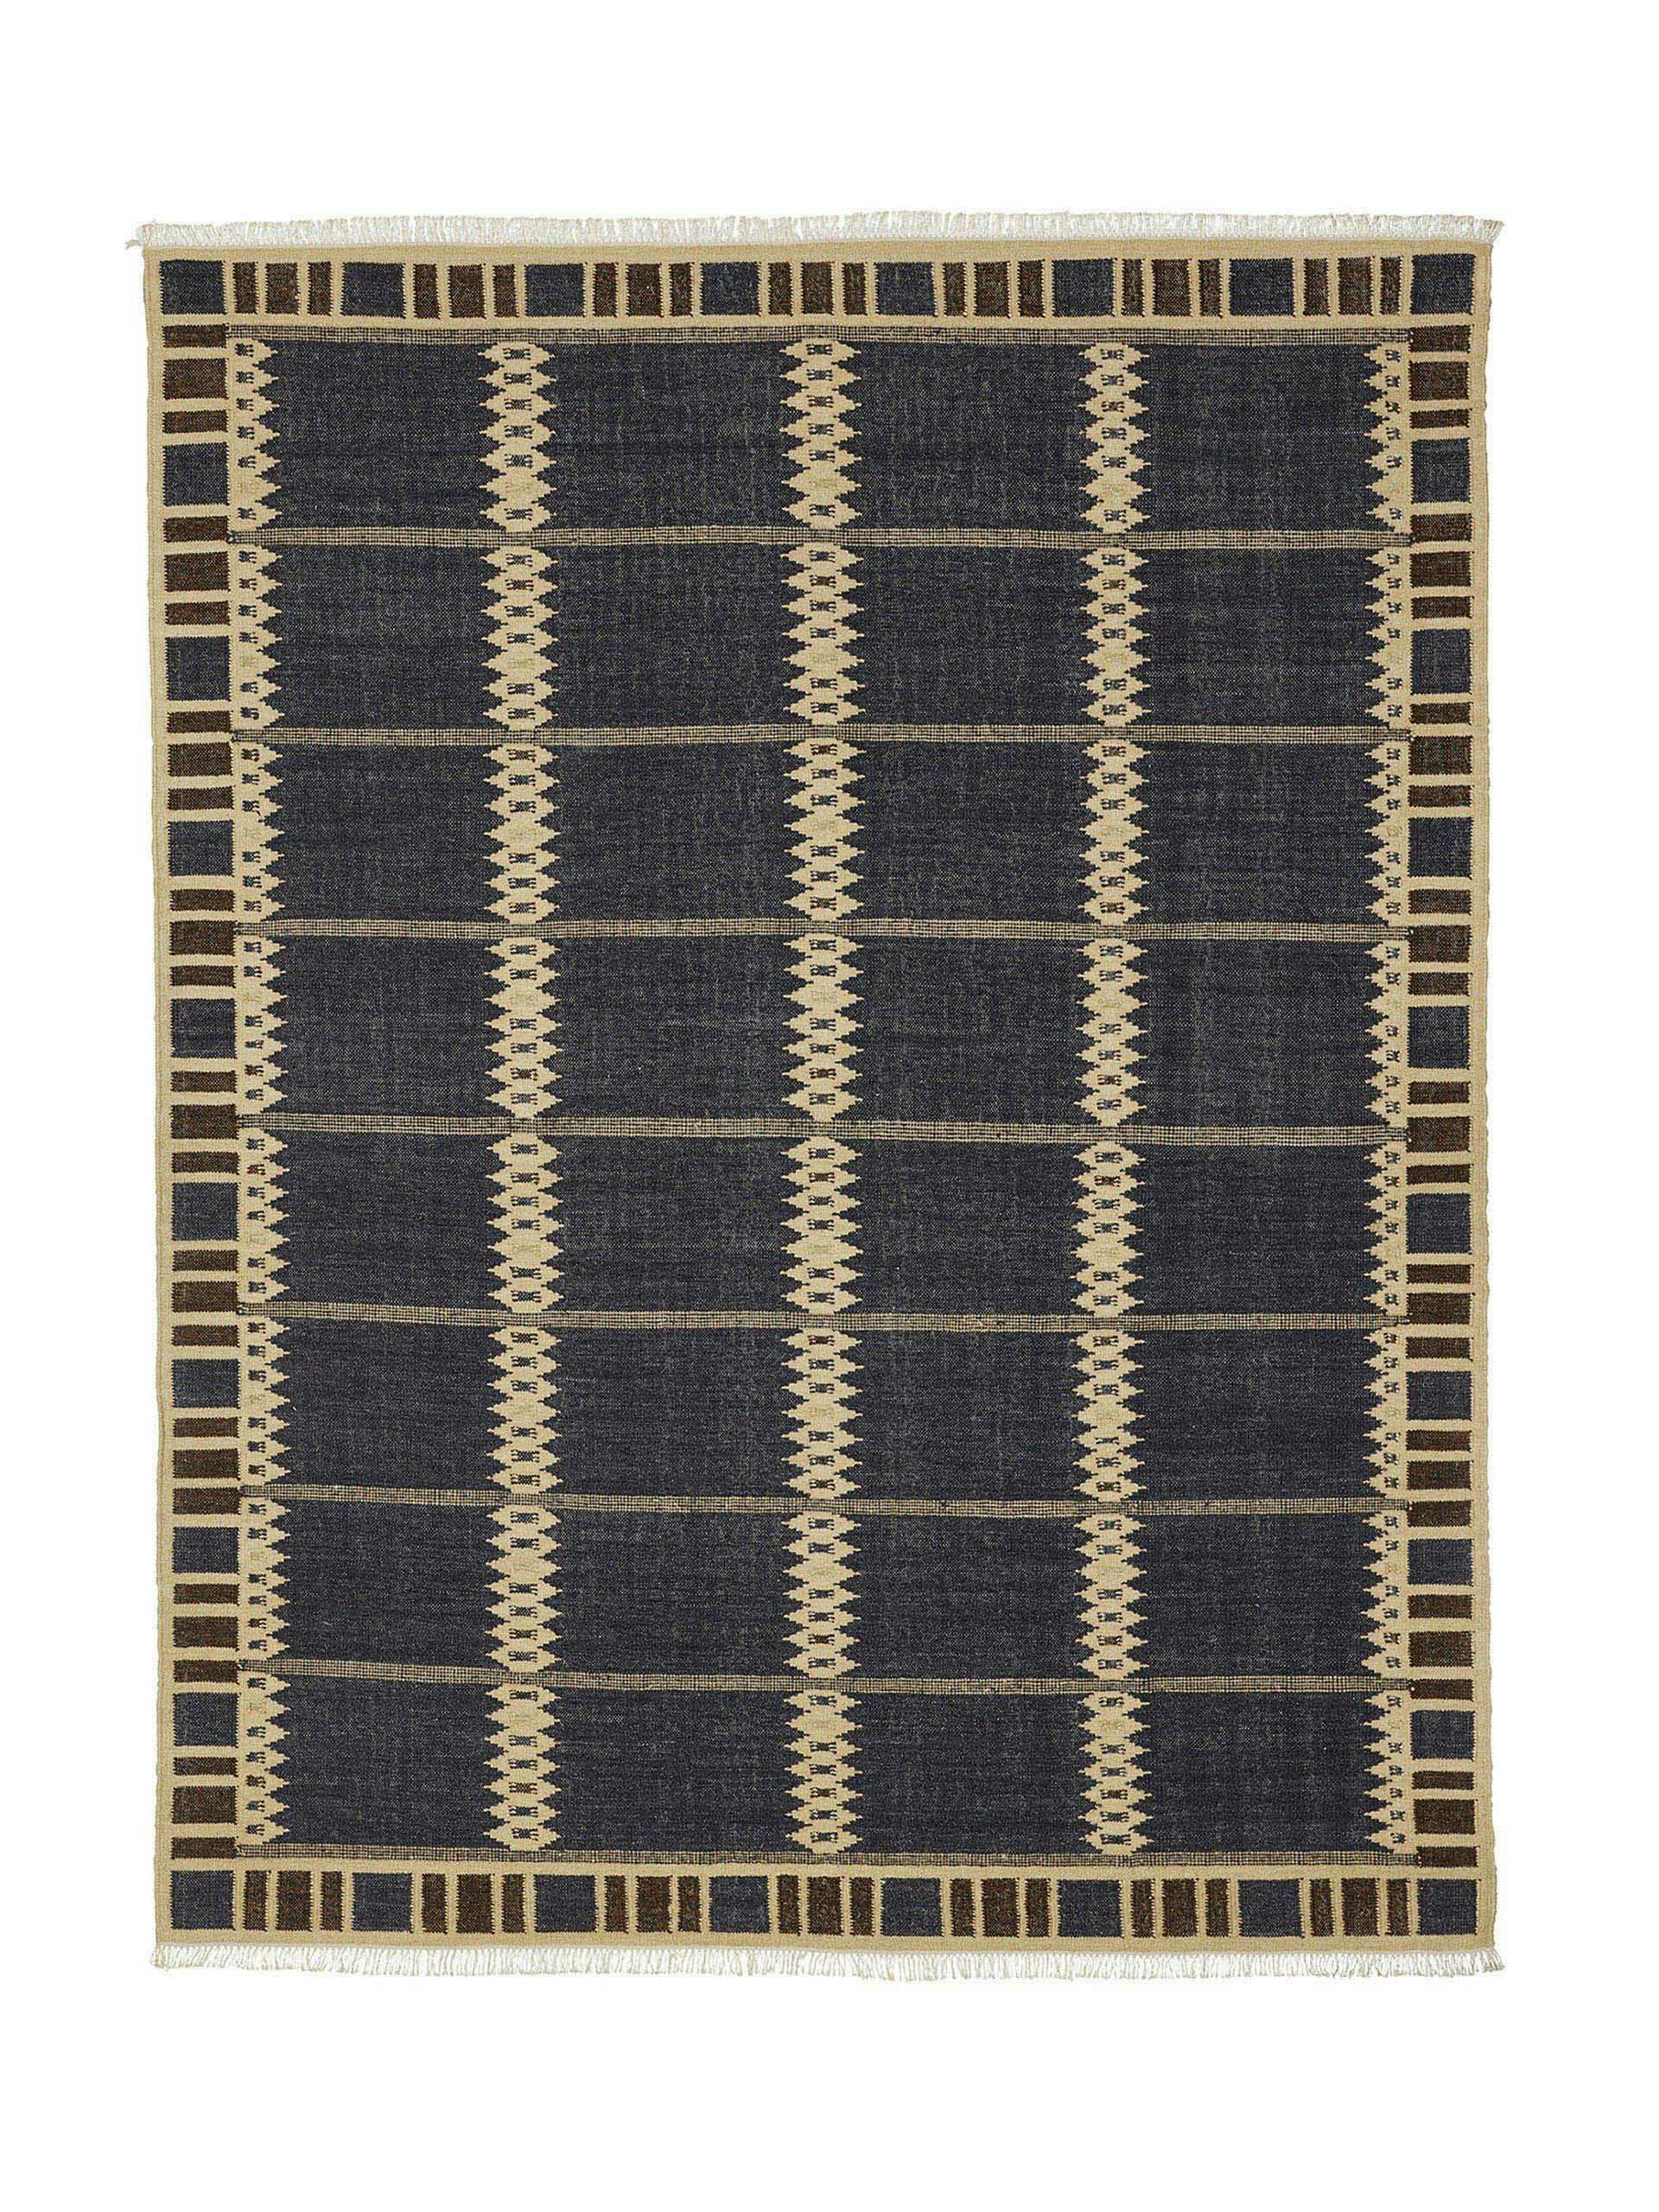 Handwoven kilim rug in indigo